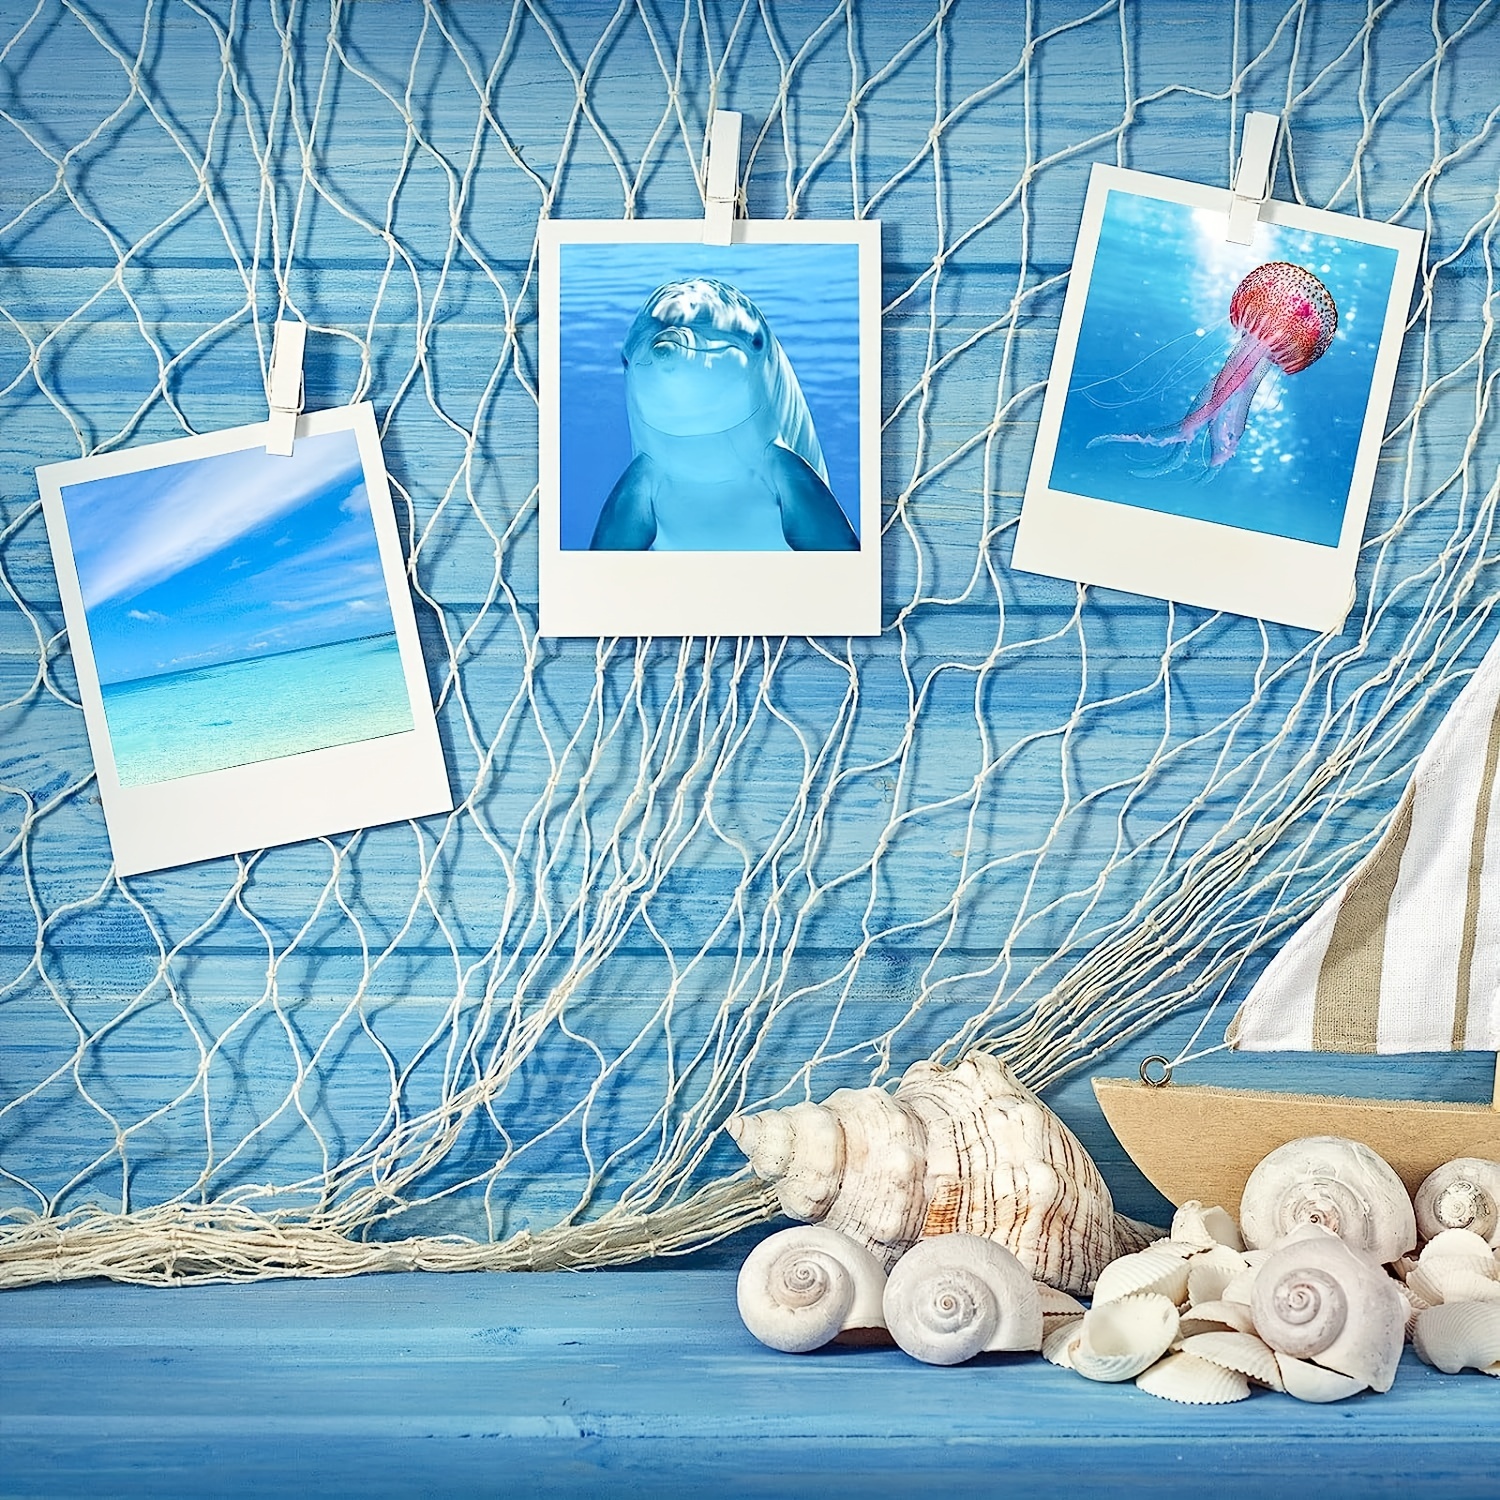 Buy Mediterranean Decorative Fishing Net with Shells Nautical Home